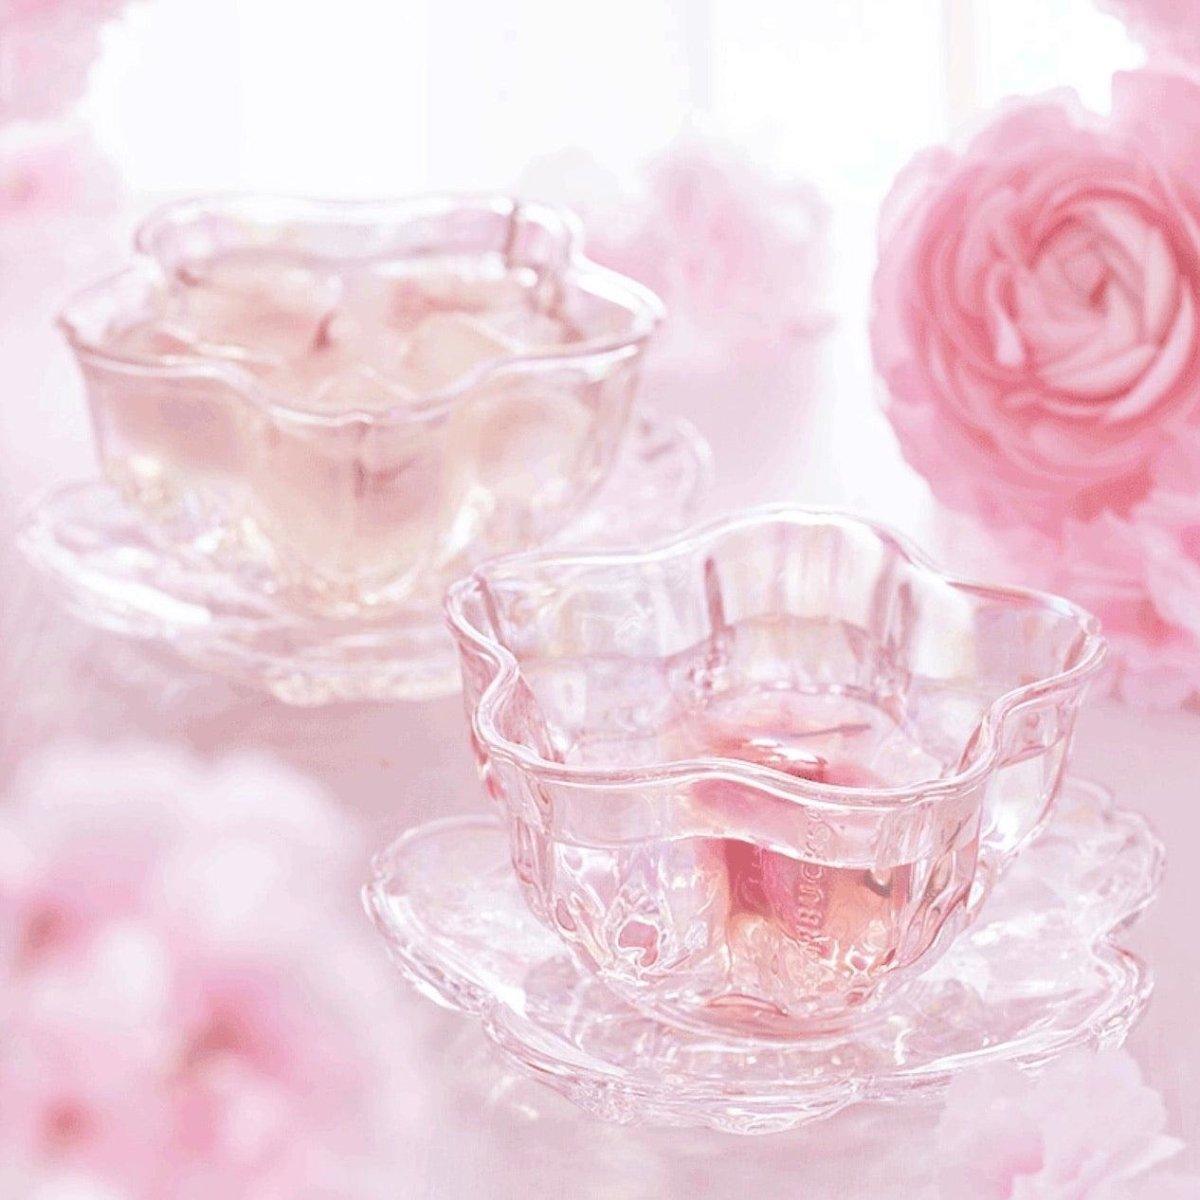 Cherry Blossom Sakura Shaped Glass Bowl and Plate Set - Ann Ann Starbucks